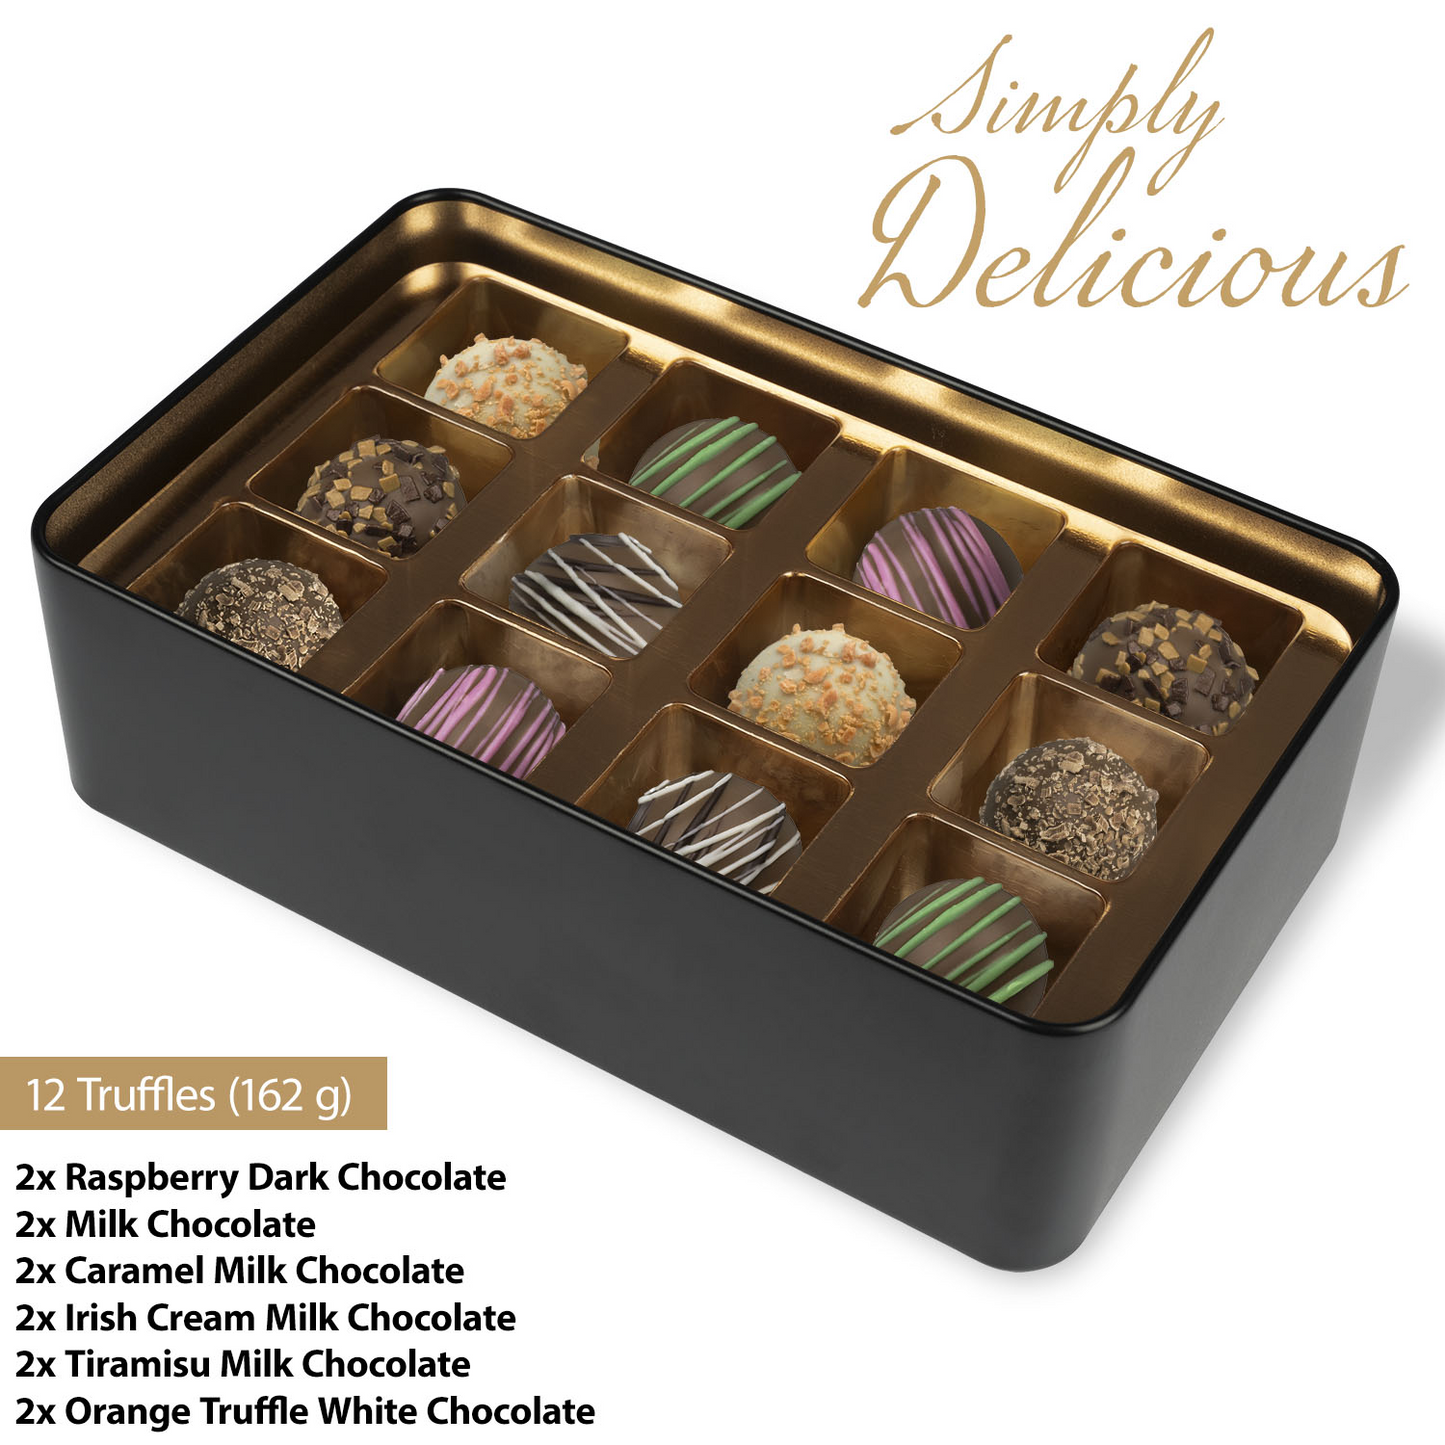 Handmade Chocolate Truffles with "Sarah's Apothecary" Tin